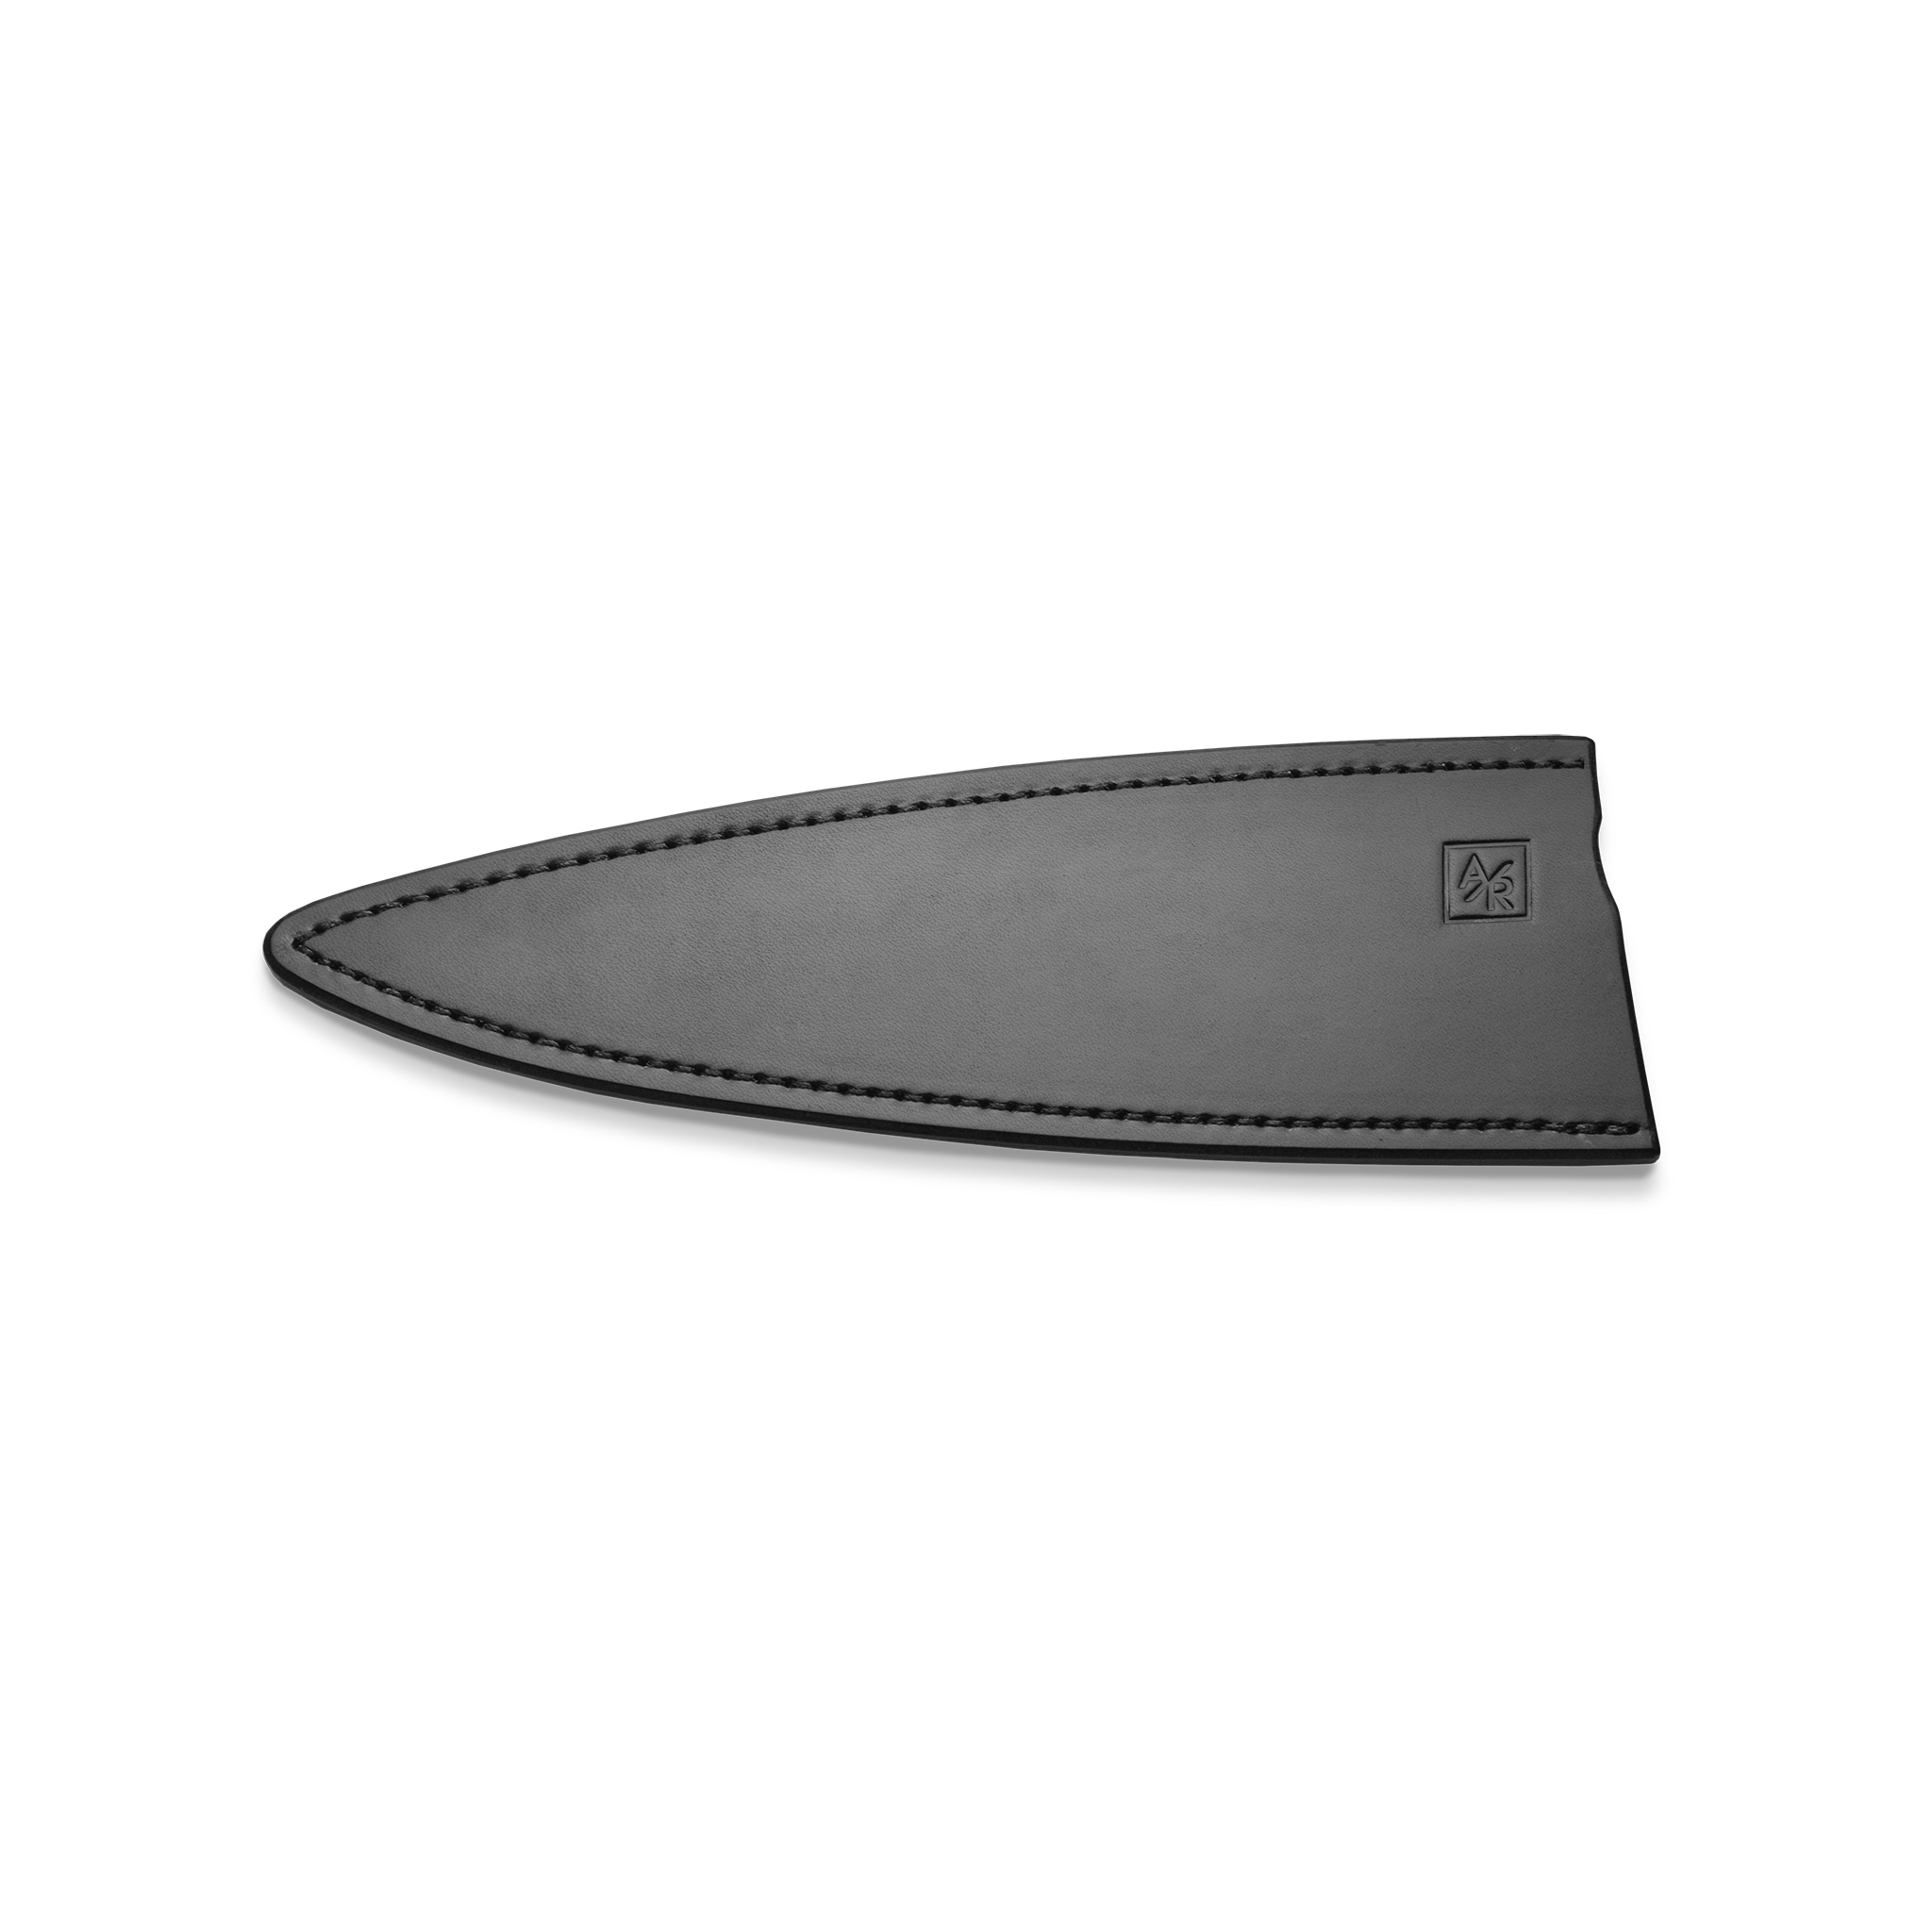 Anselm Chef Knife Leather Sheath